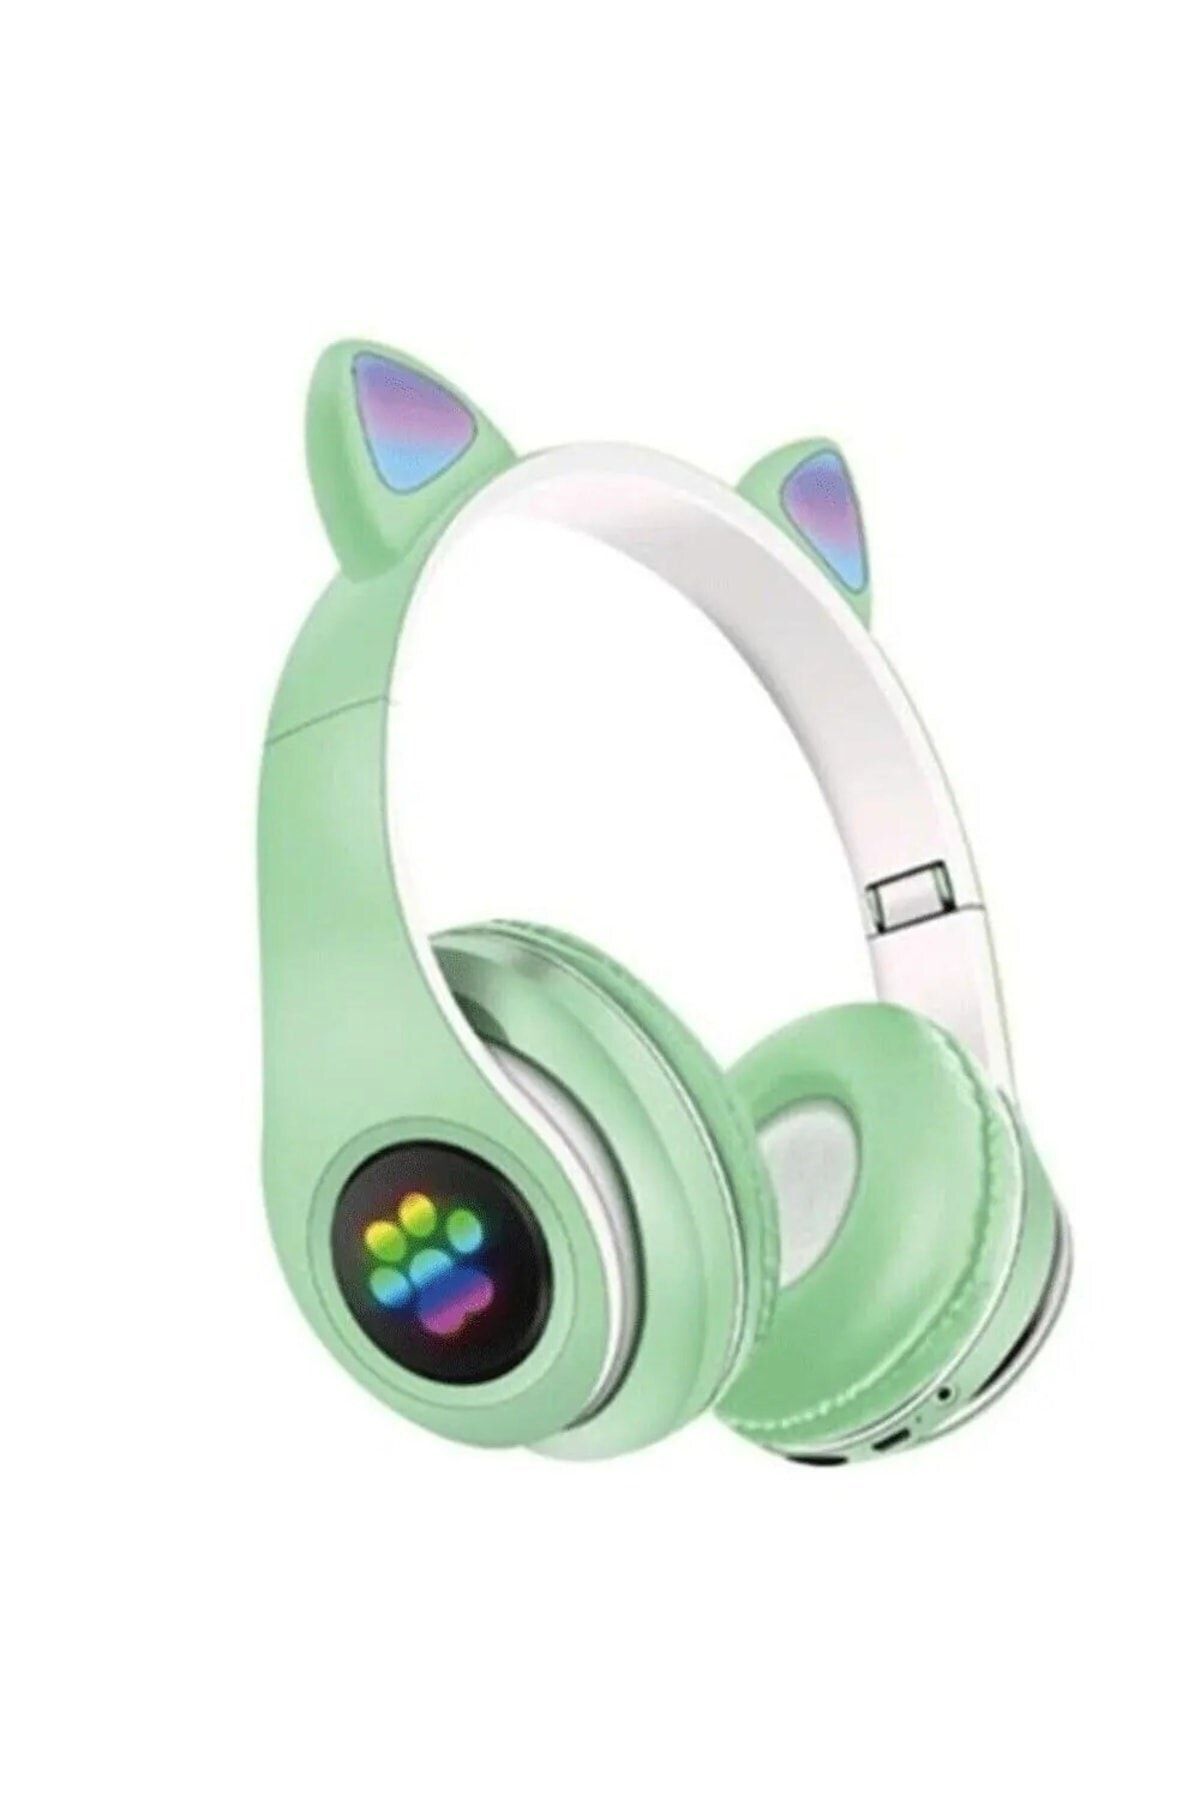 pazariz Rgb Işıklı Kedi Kulaklı Kulaküstü Bluetooth Kulaklık Yeşil